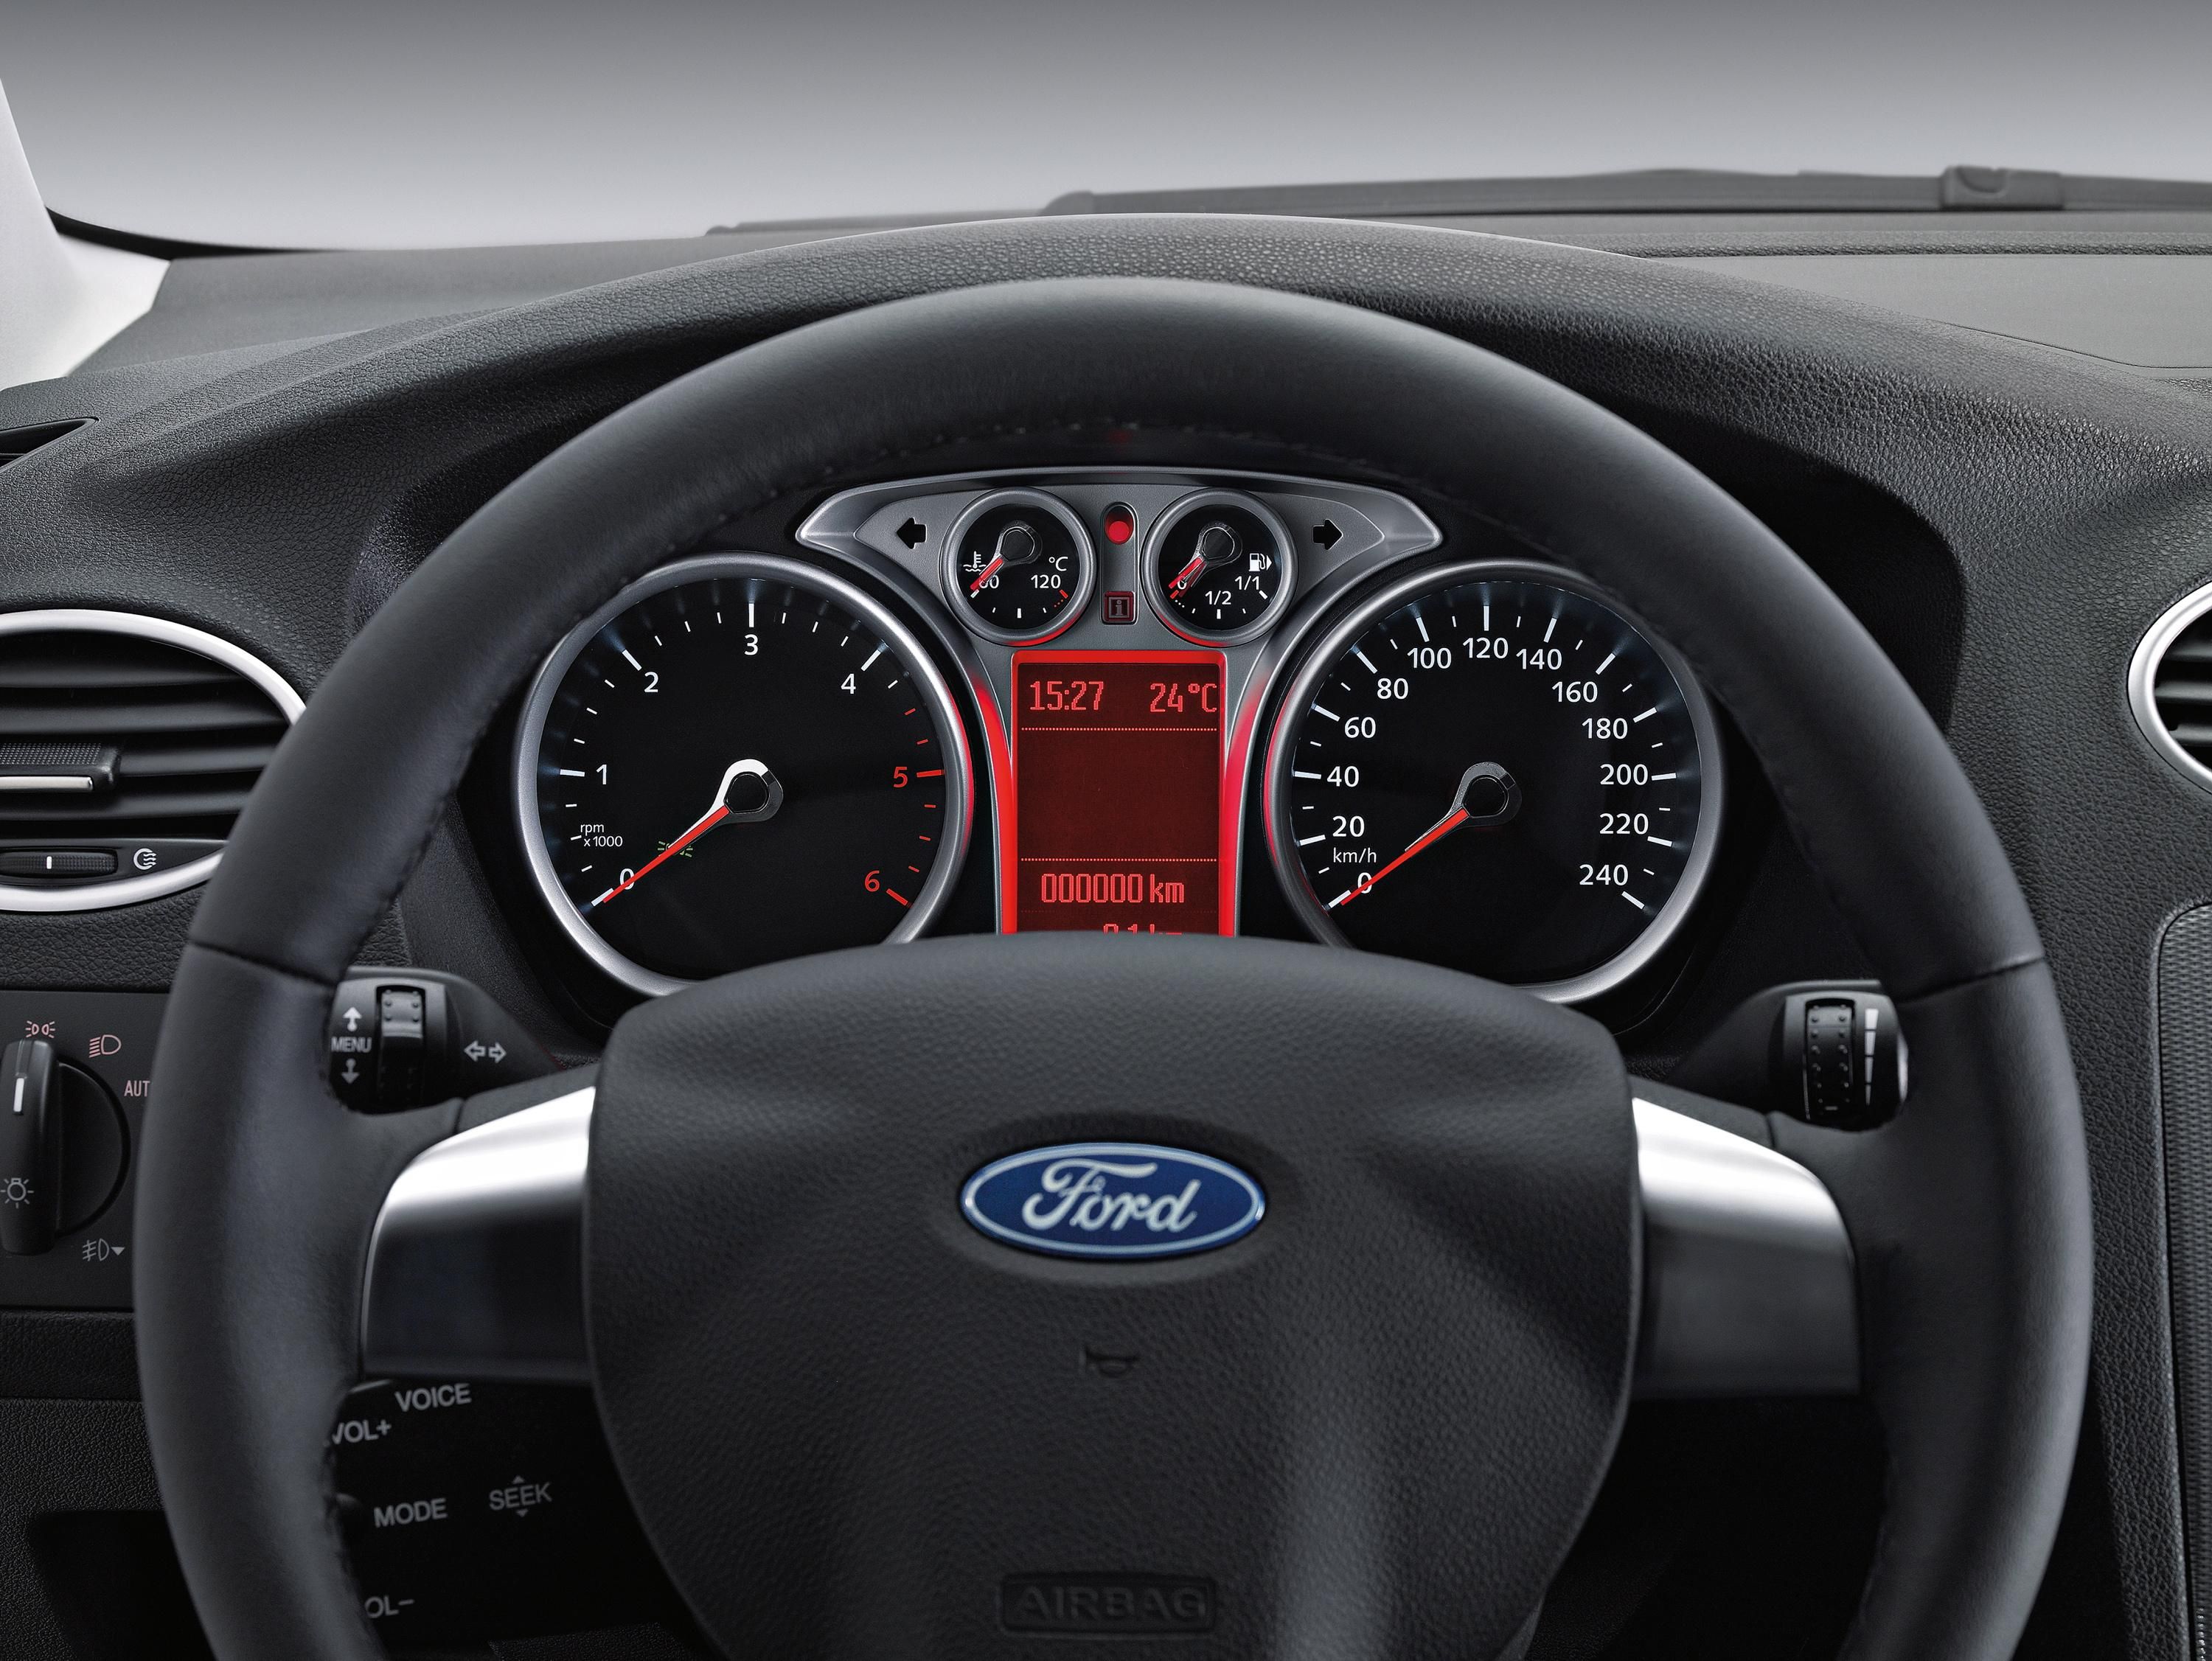 2008 Ford Focus (European version)